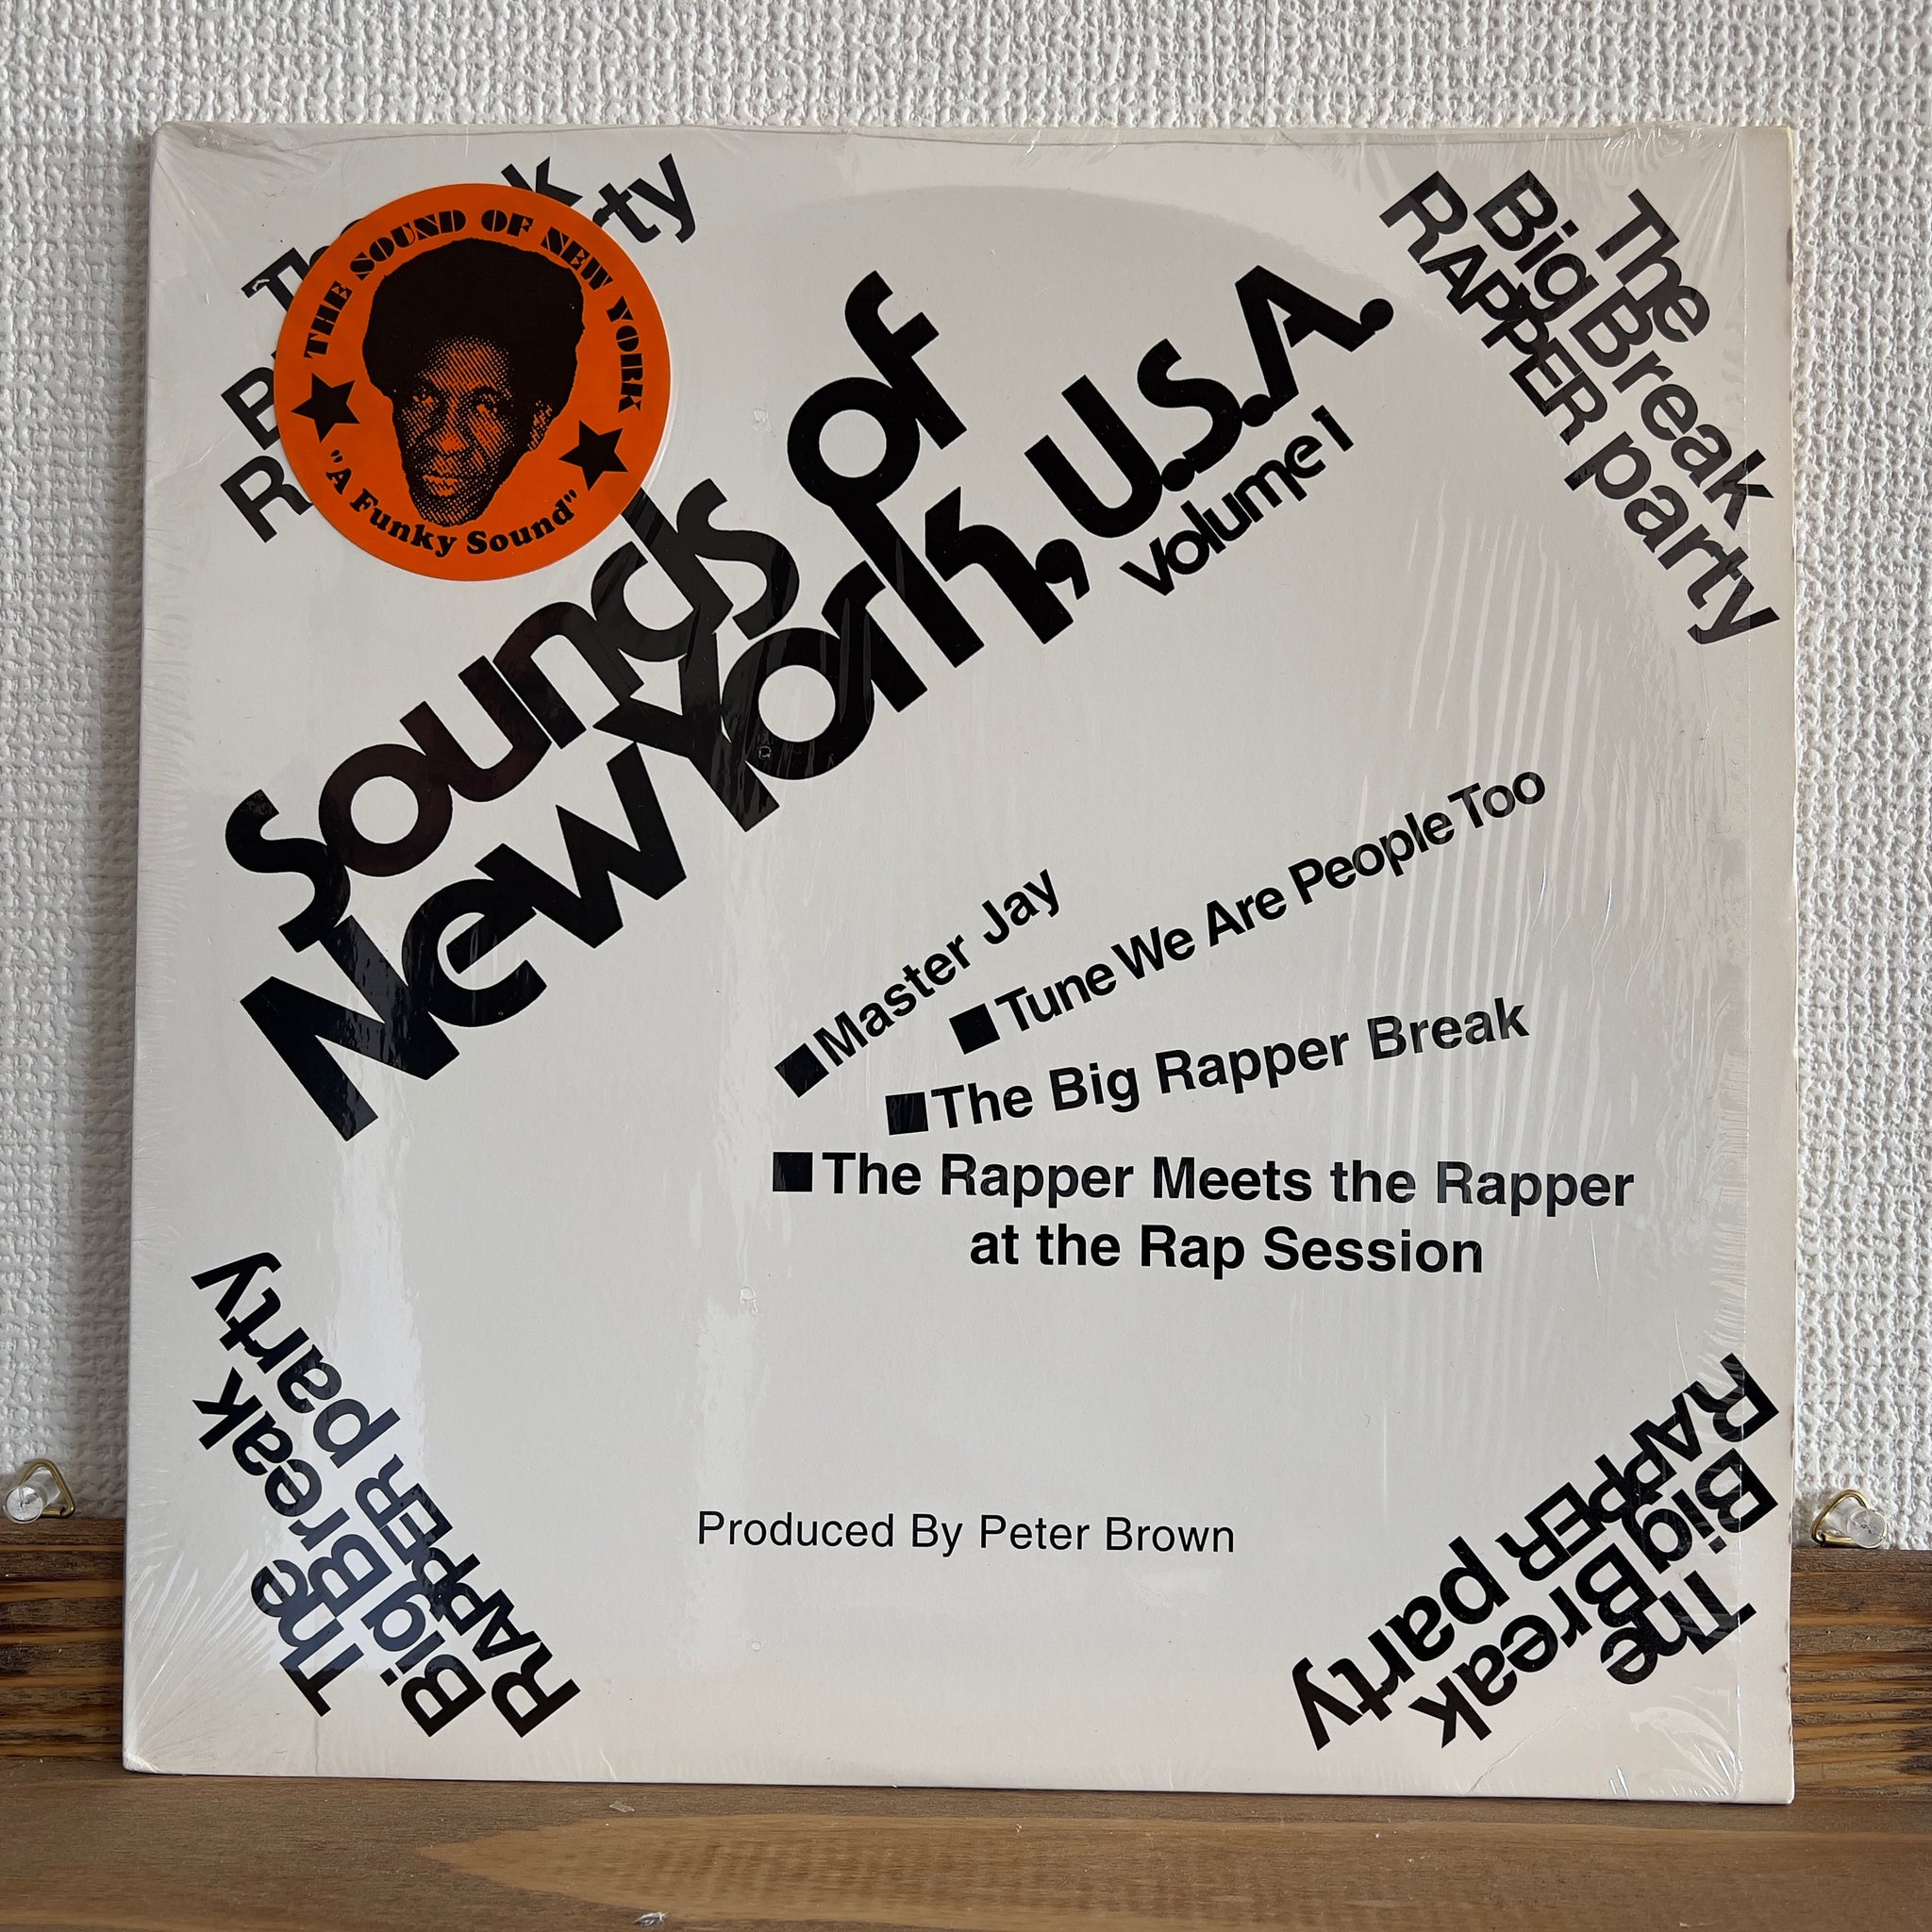 Sounds Of New York, U.S.A. Volume 1 - The Big Break Rapper Party